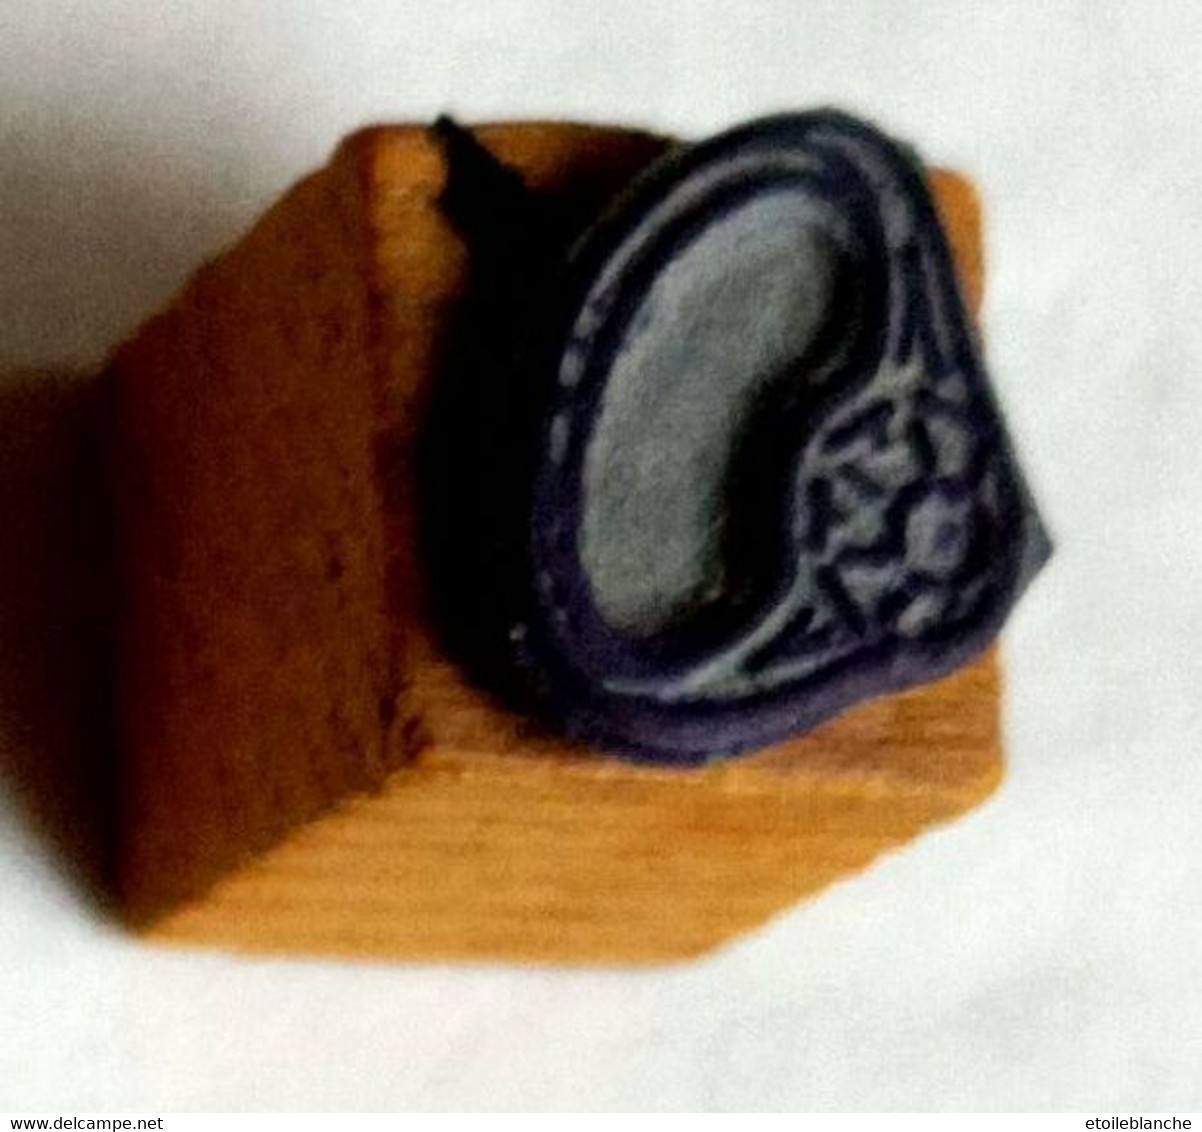 Bijou, Bague, Ancien Tampon Scolaire à Imprimer, Cube Bois - French Antique Rubber Stamp - Ring, Jewelry - Scrapbooking